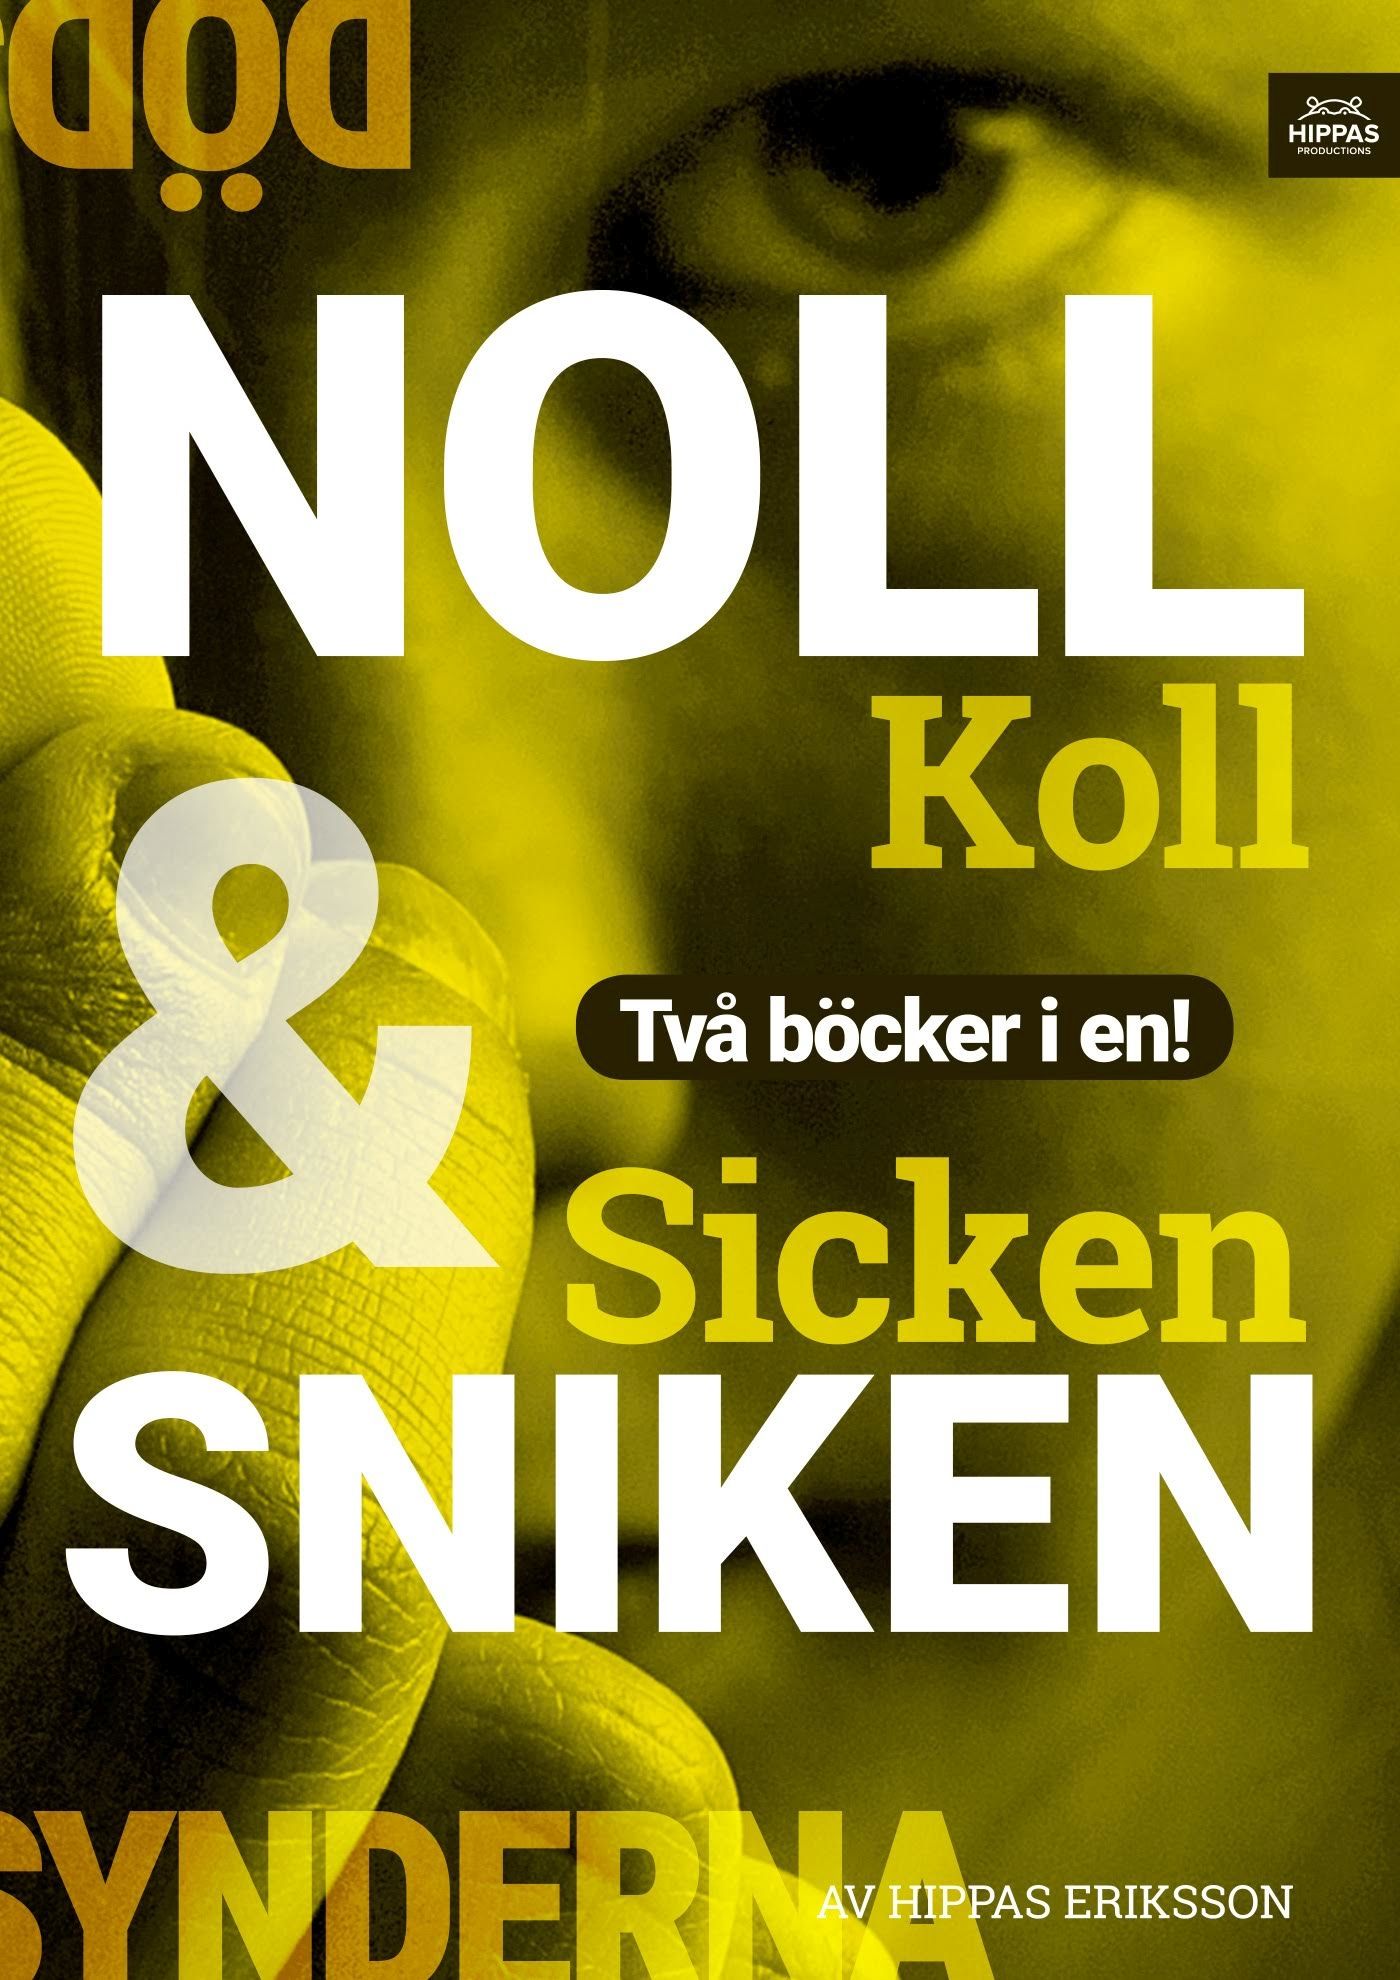 Noll koll / Sicken sniken, e-bog af Hippas Eriksson